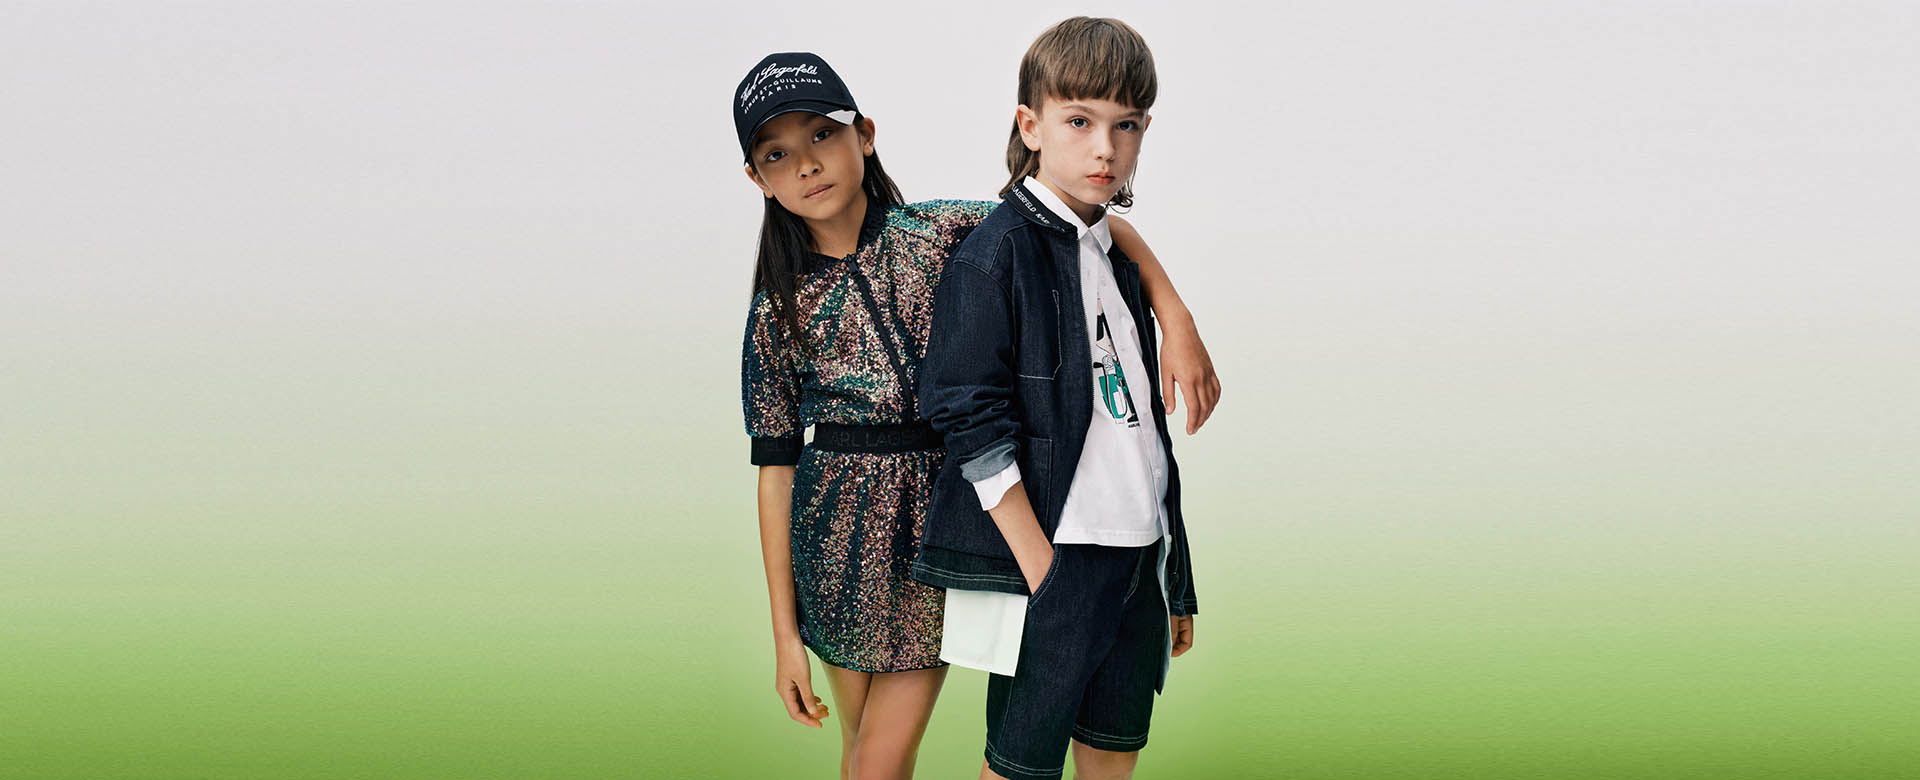 Karl Lagerfeld Kids sequin dress and costume for children